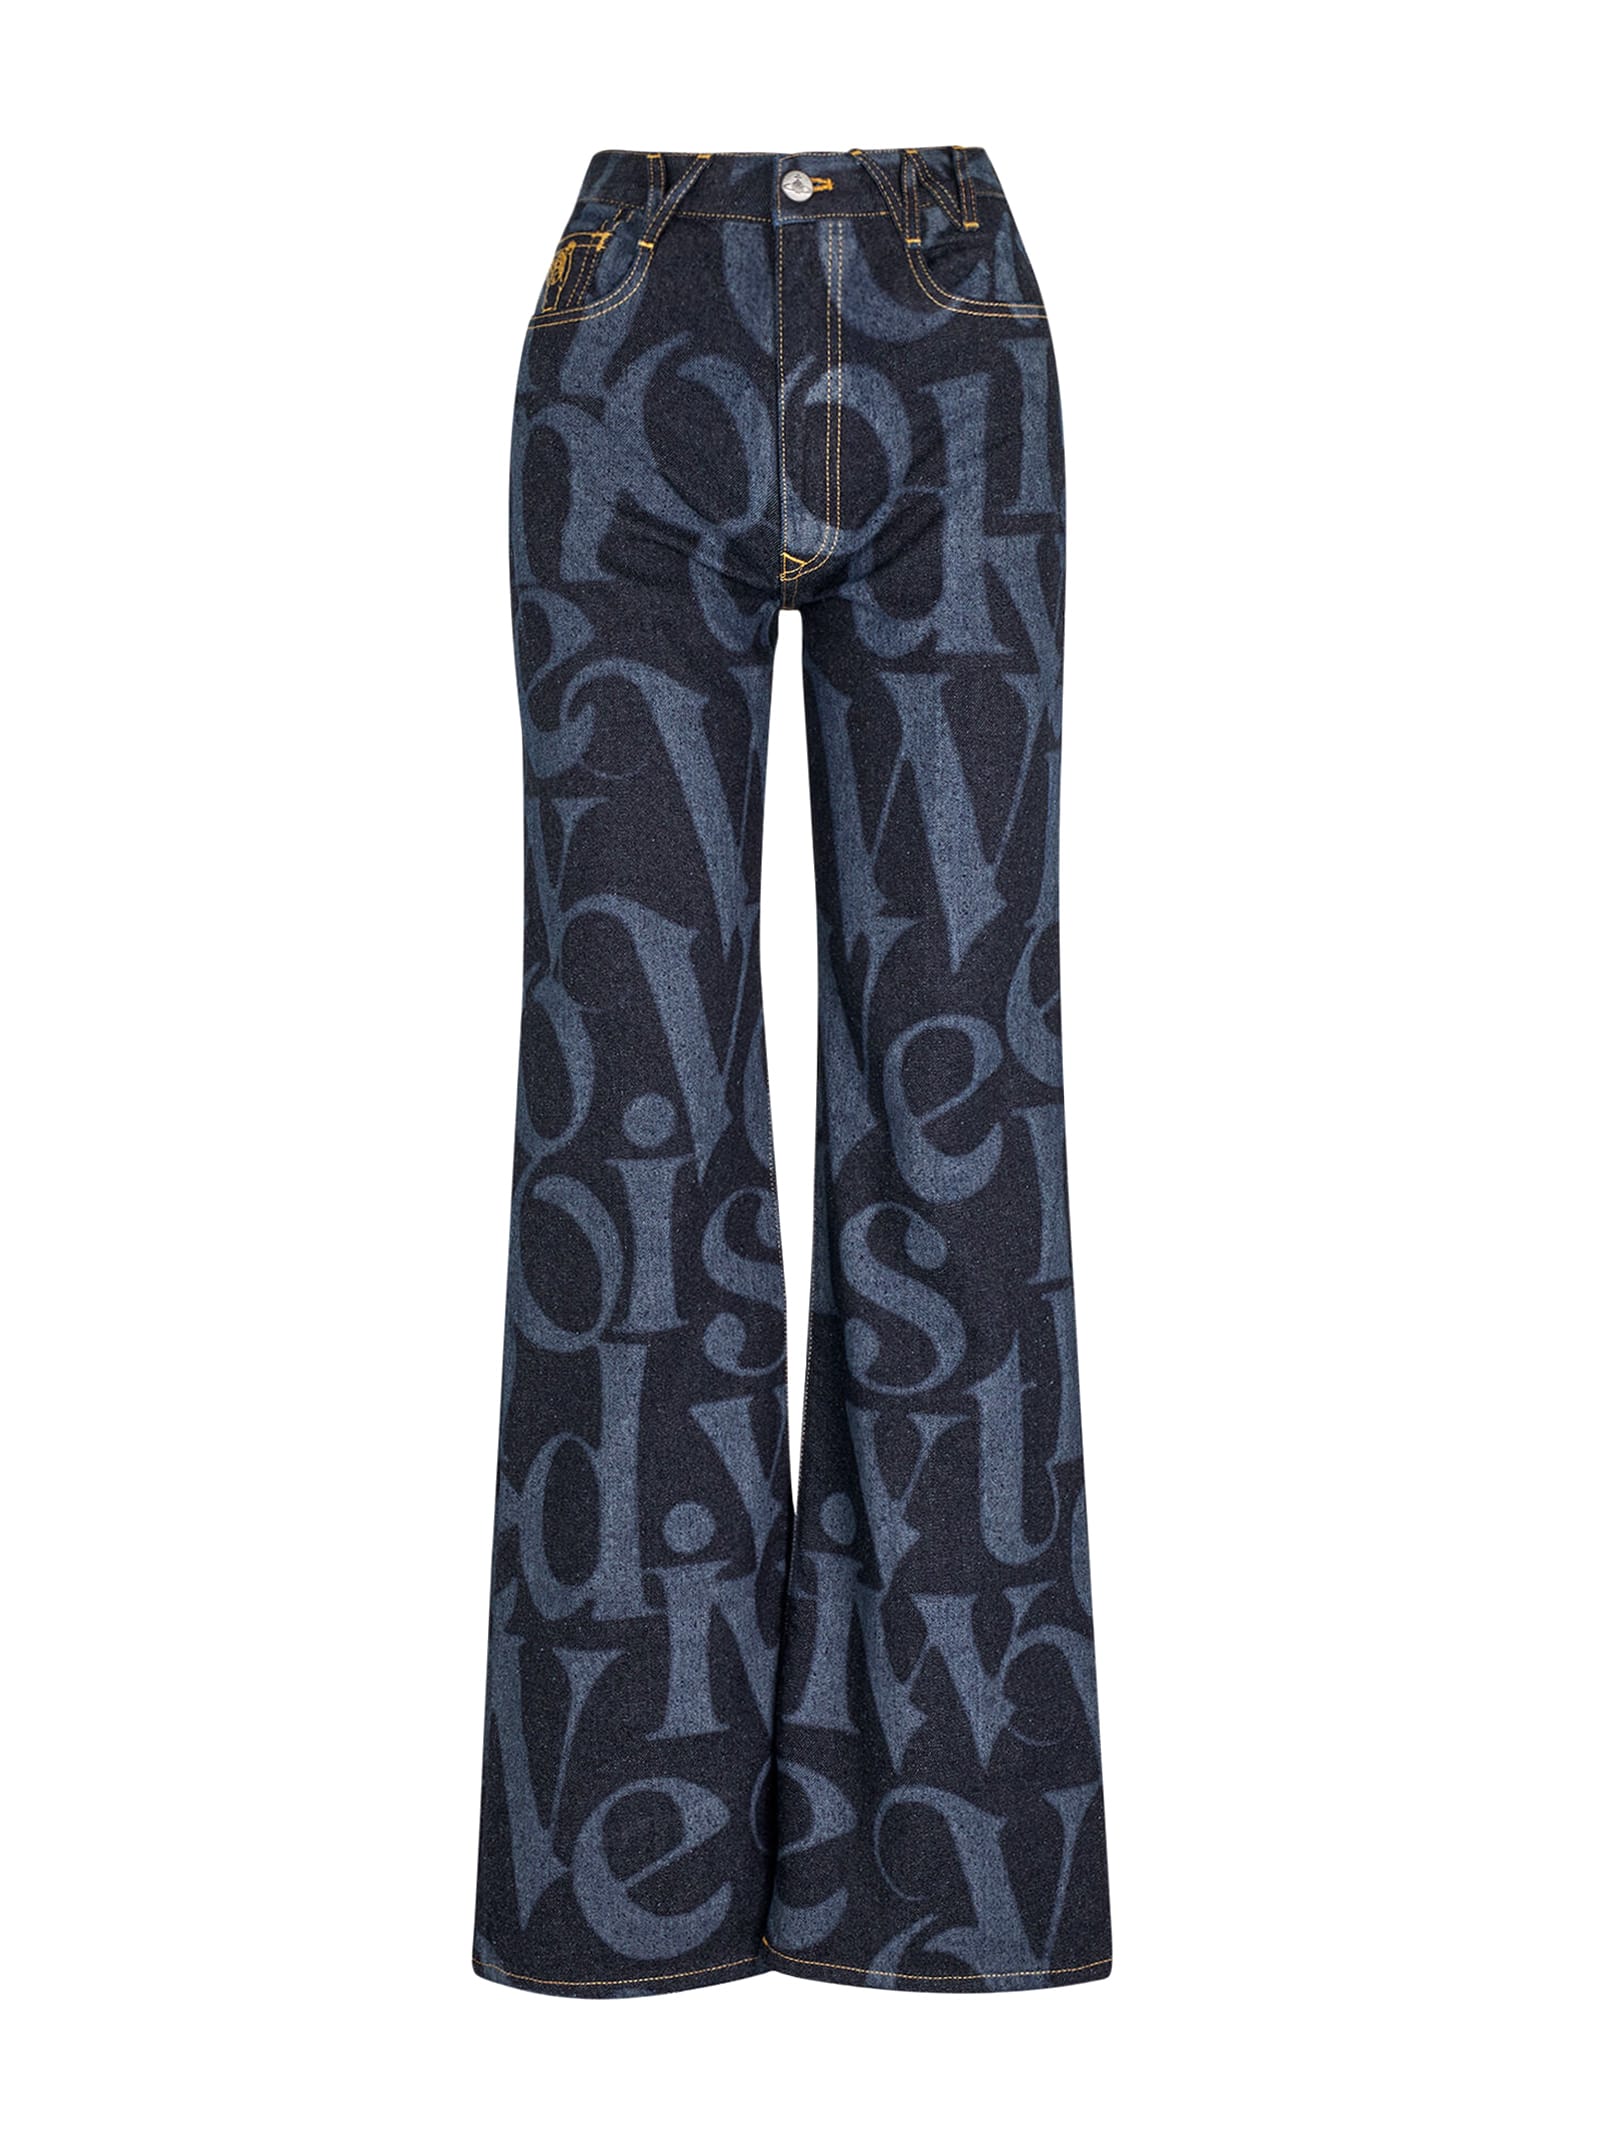 Vivienne Westwood Ray Five Pocket Jeans